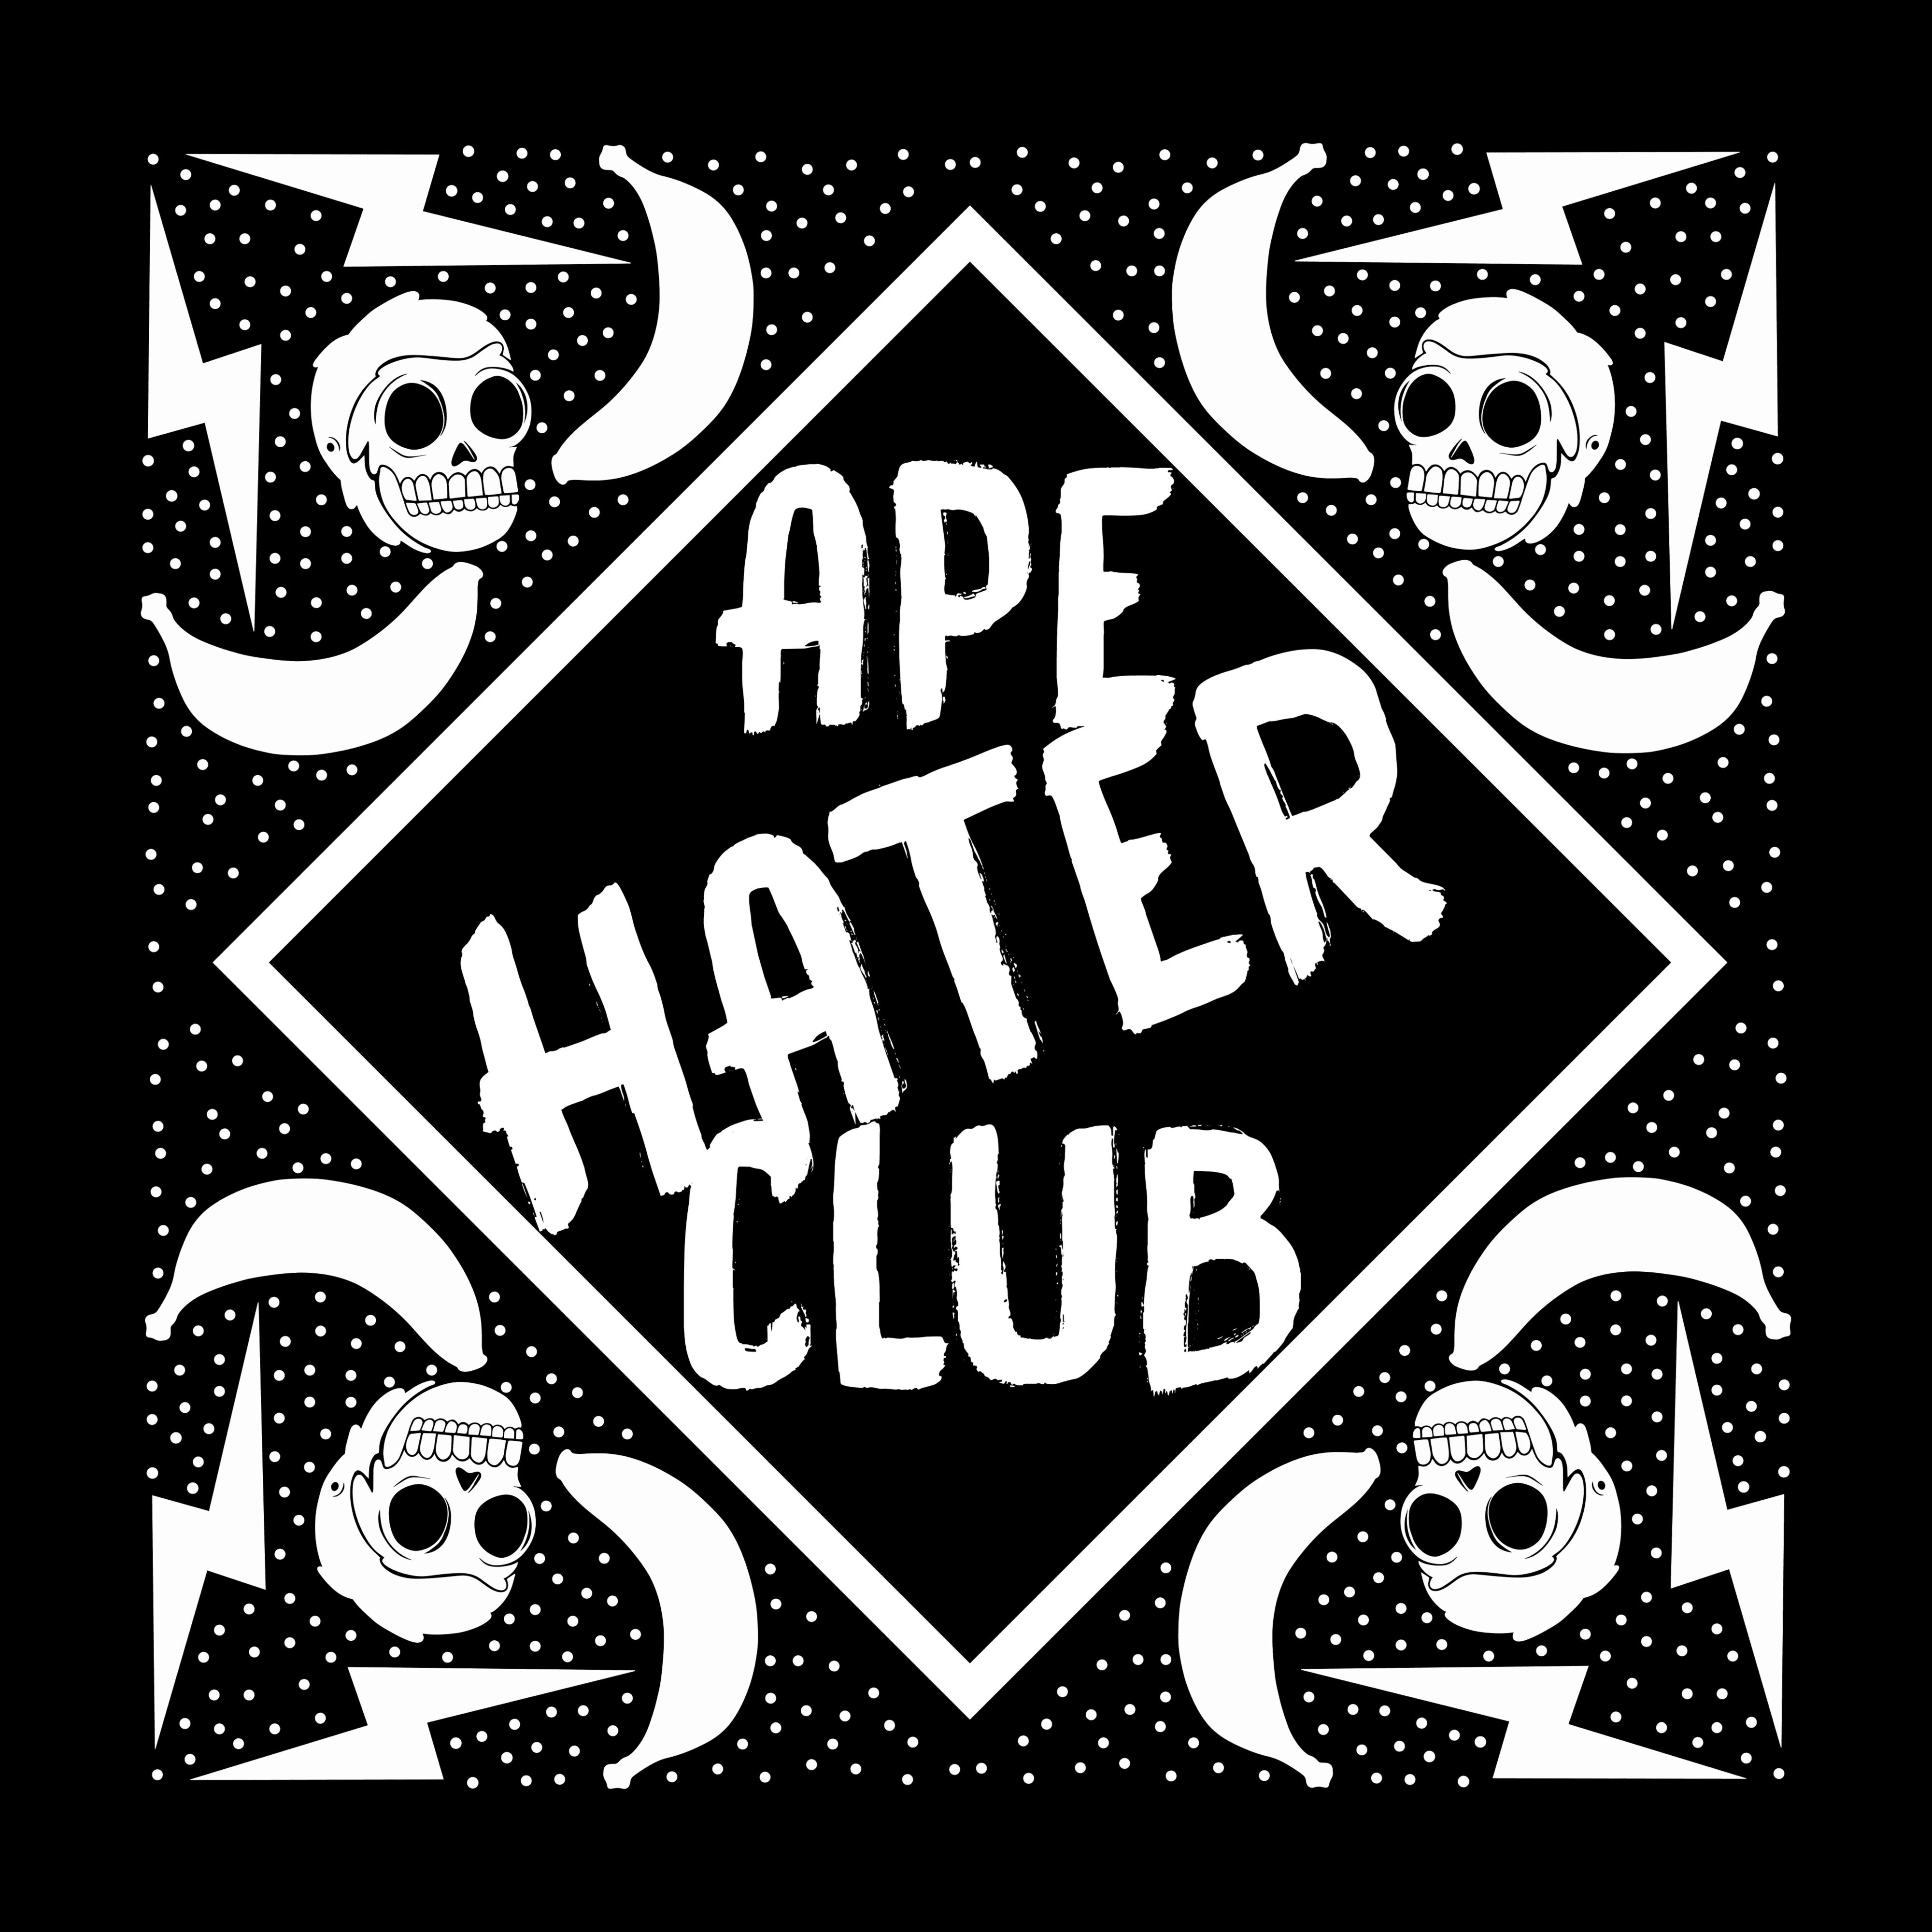 Ape Hater Club